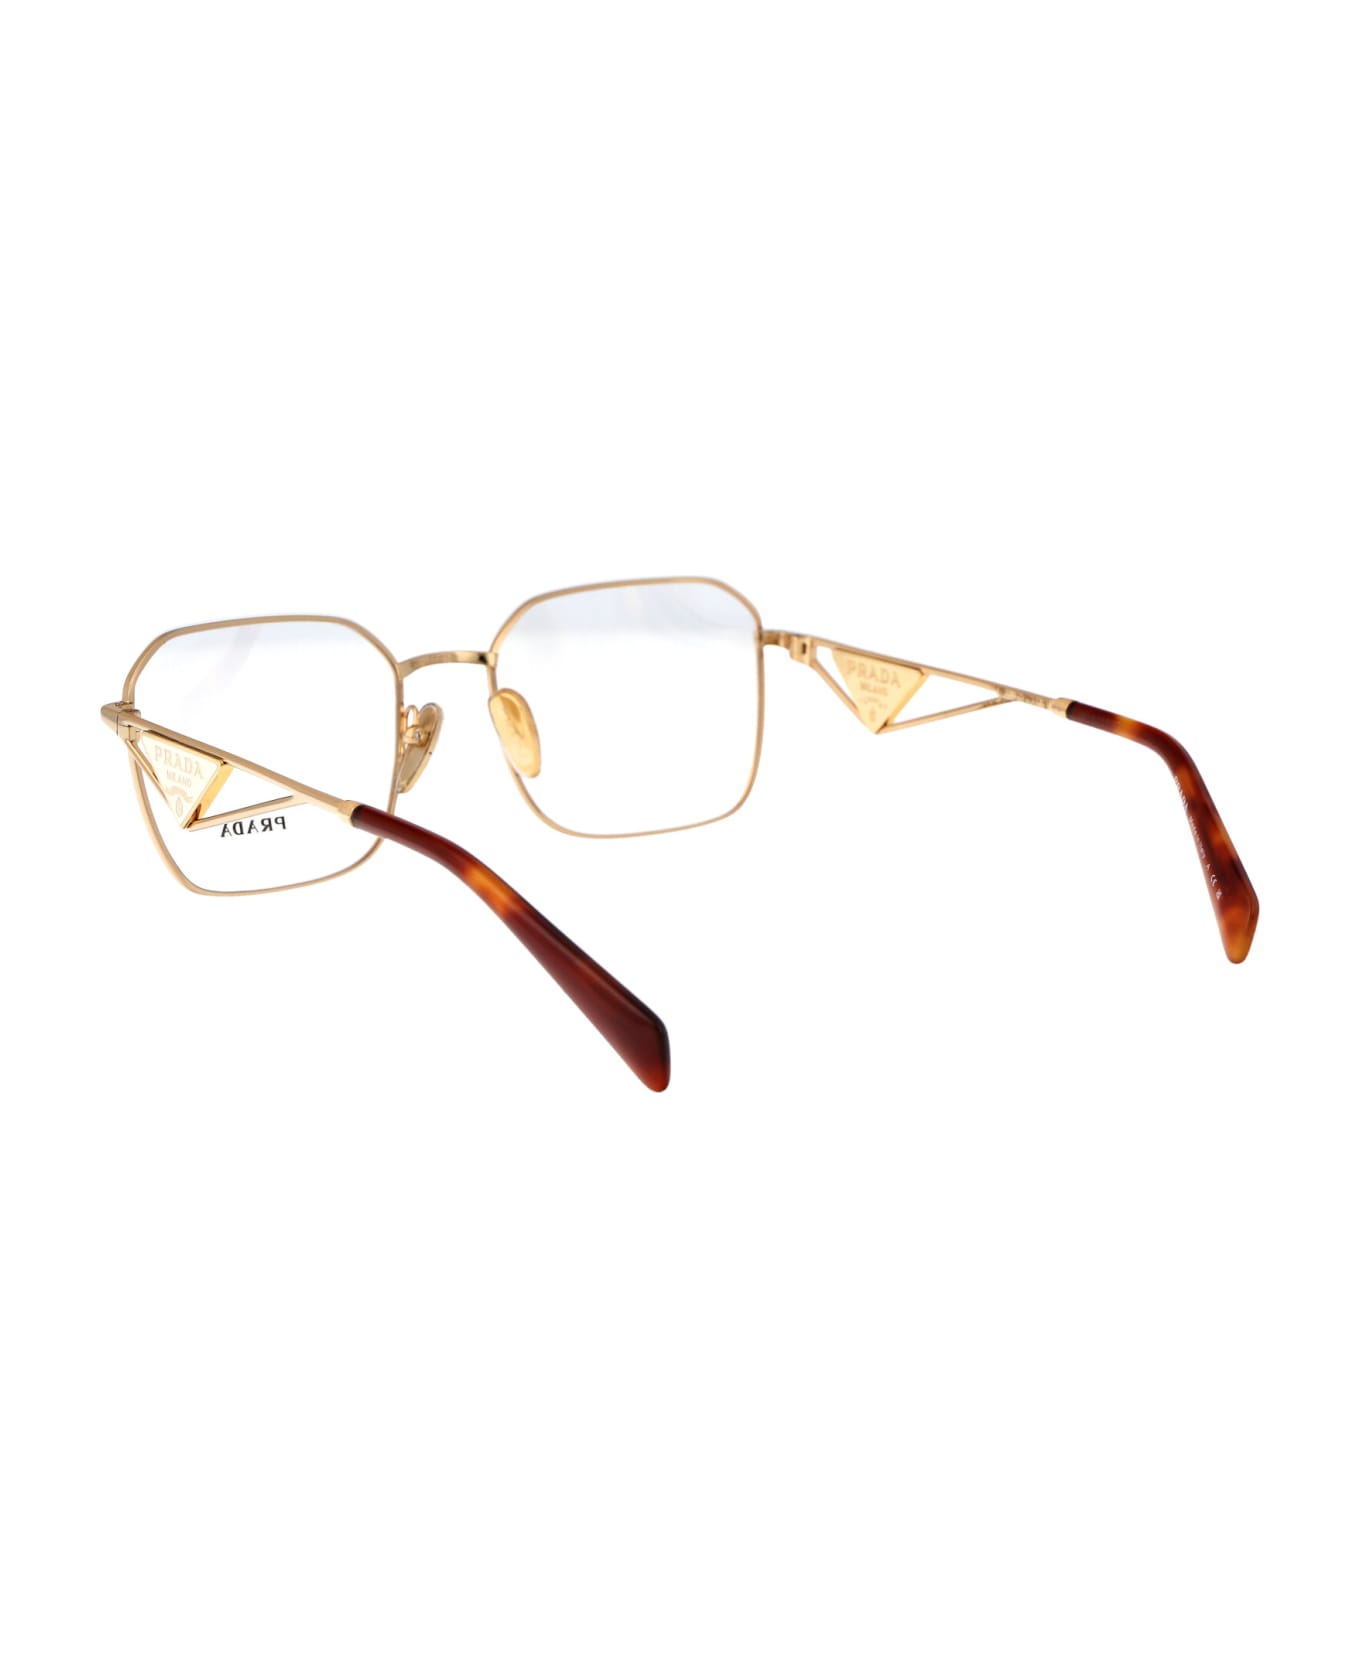 Prada Eyewear 0pr A51v Glasses - 5AK1O1 GOLD